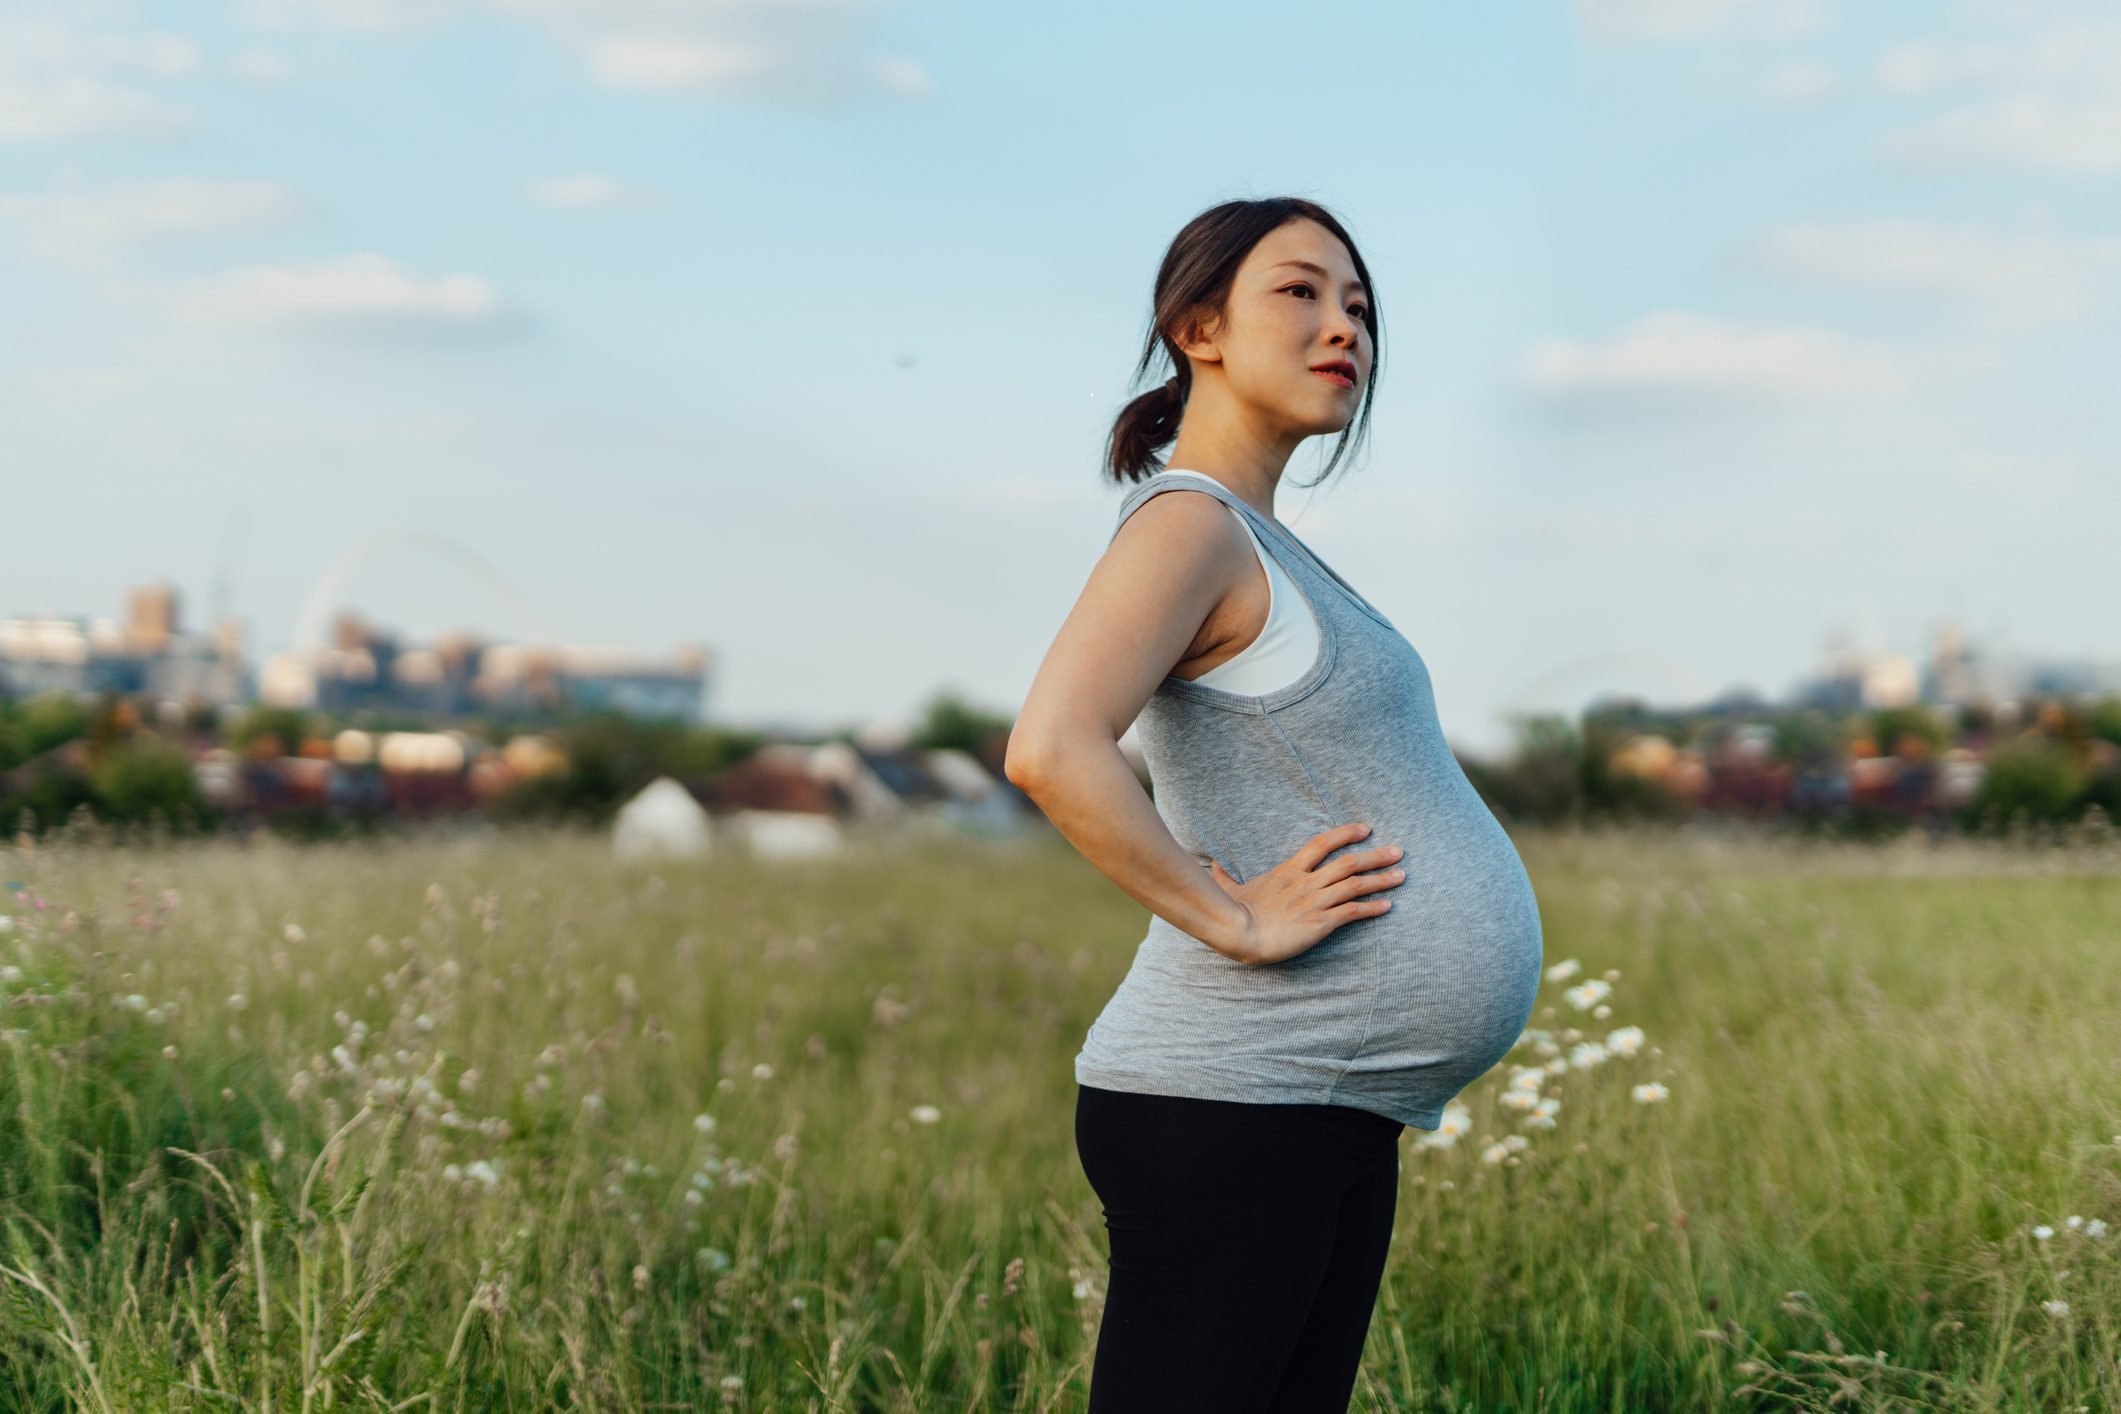 I am raising a P2 baby: The ABC of emergency birth pregnancy pills - The  Standard Health